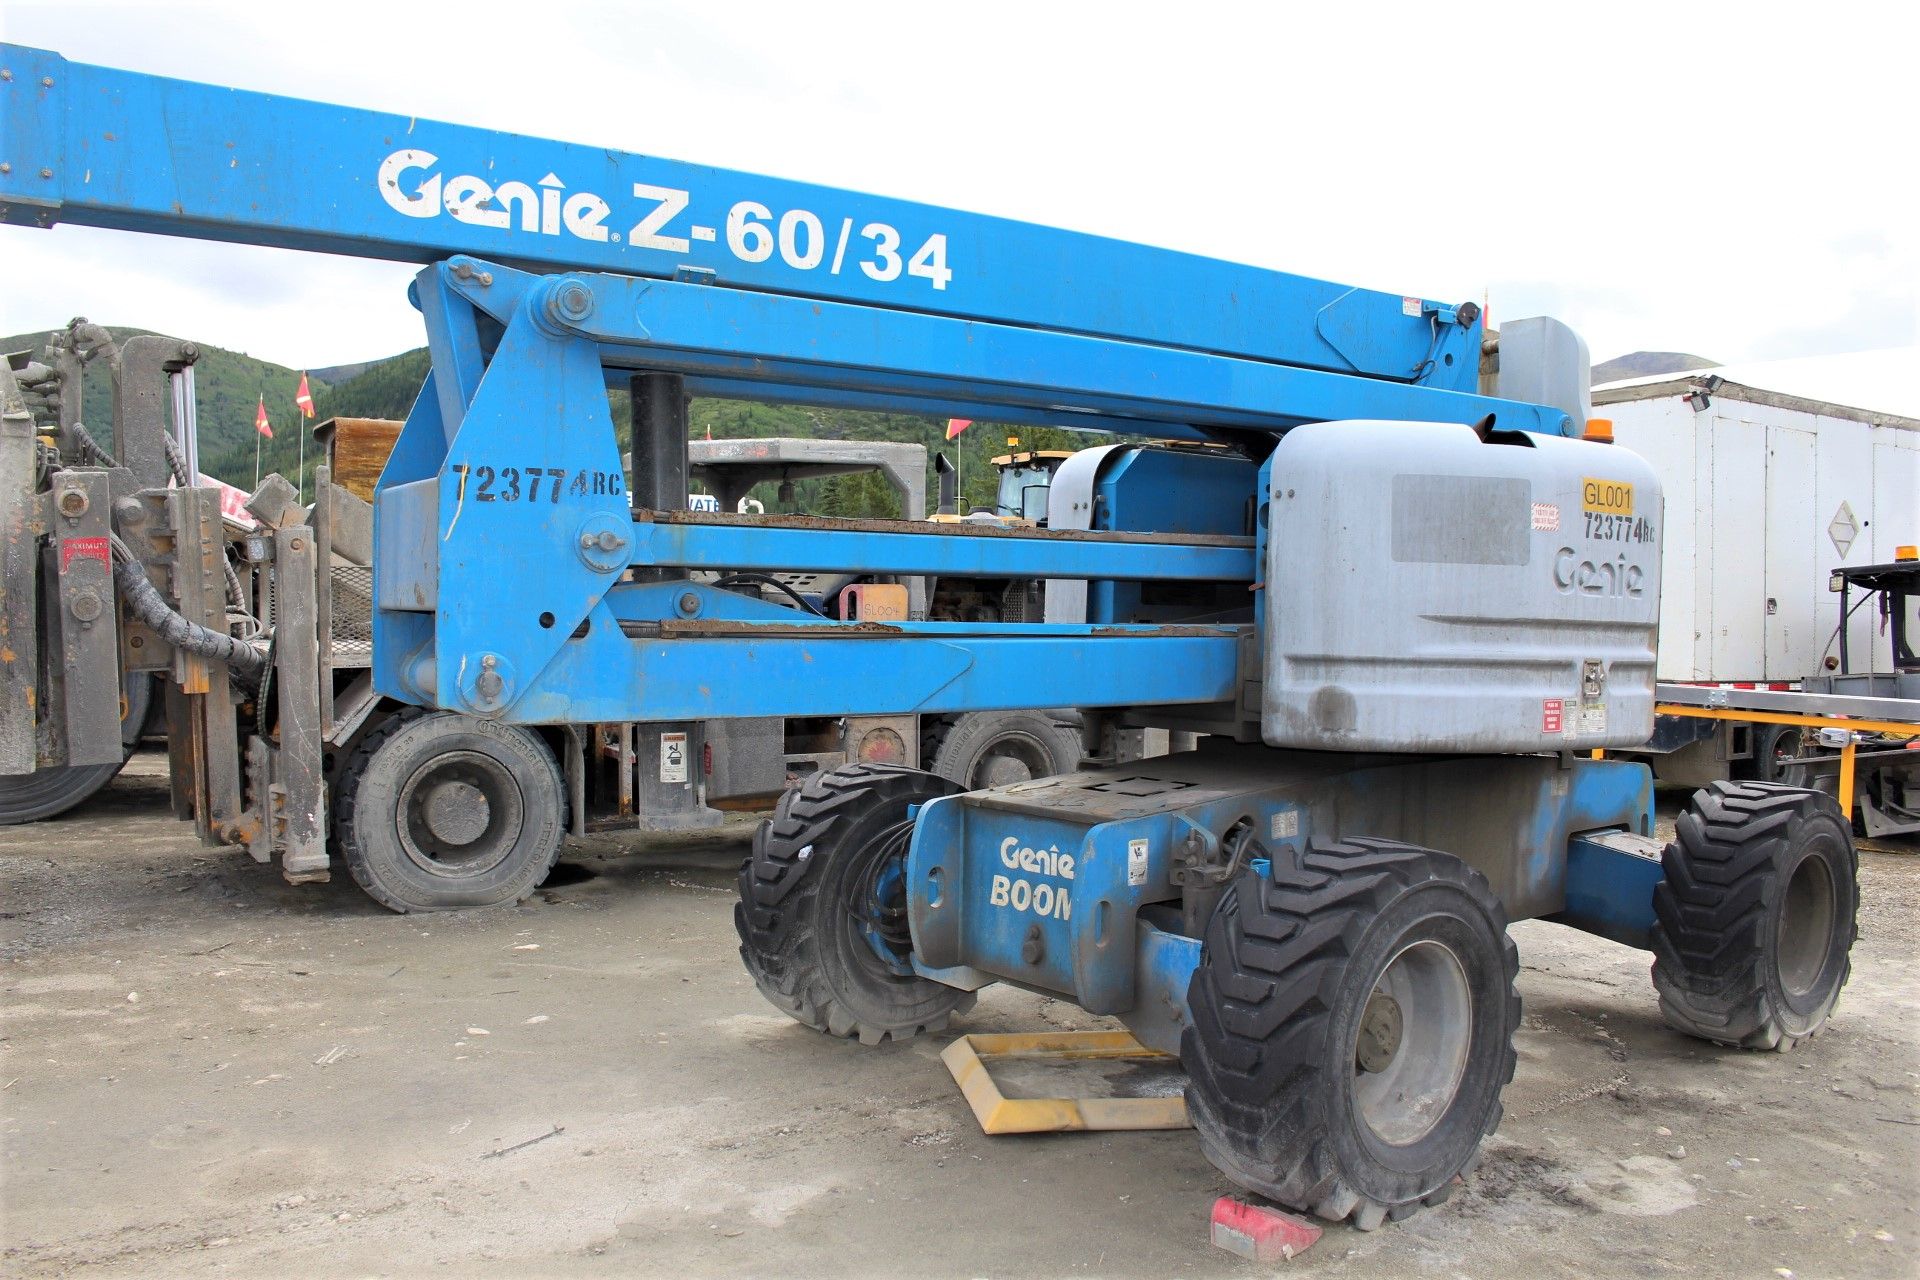 2008 Genie Z-60/34 Genie Lift, New Circuit Board, 66'4" Working Height; S/N Z6008-8380; Meter - Image 4 of 9